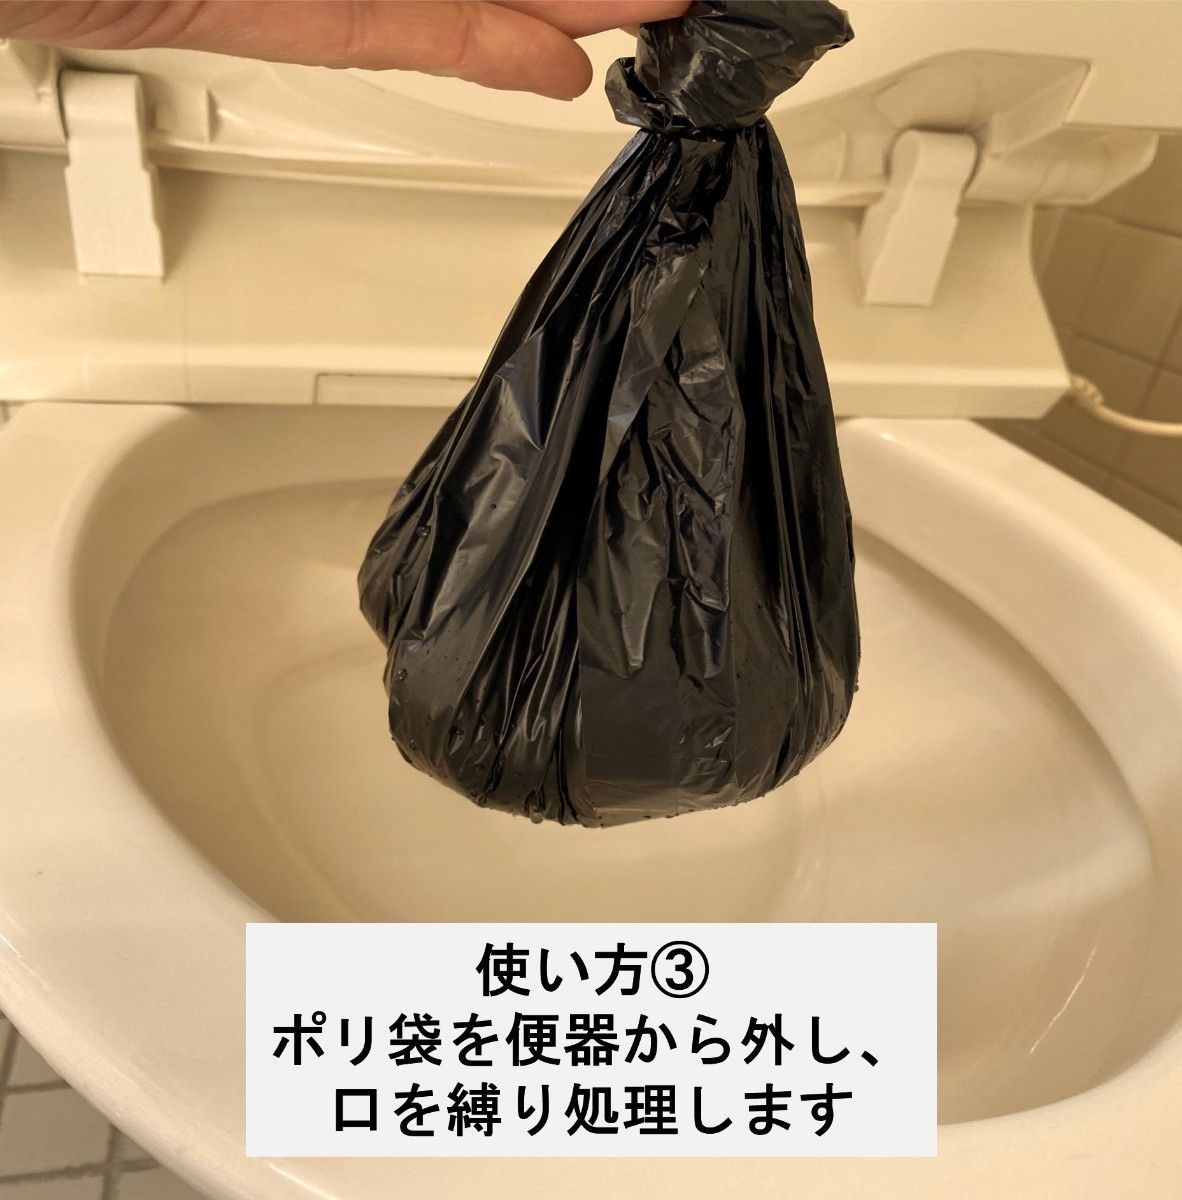 T2防災対策 100回分 トイレ凝固剤 袋付 抗菌 消臭 日本製